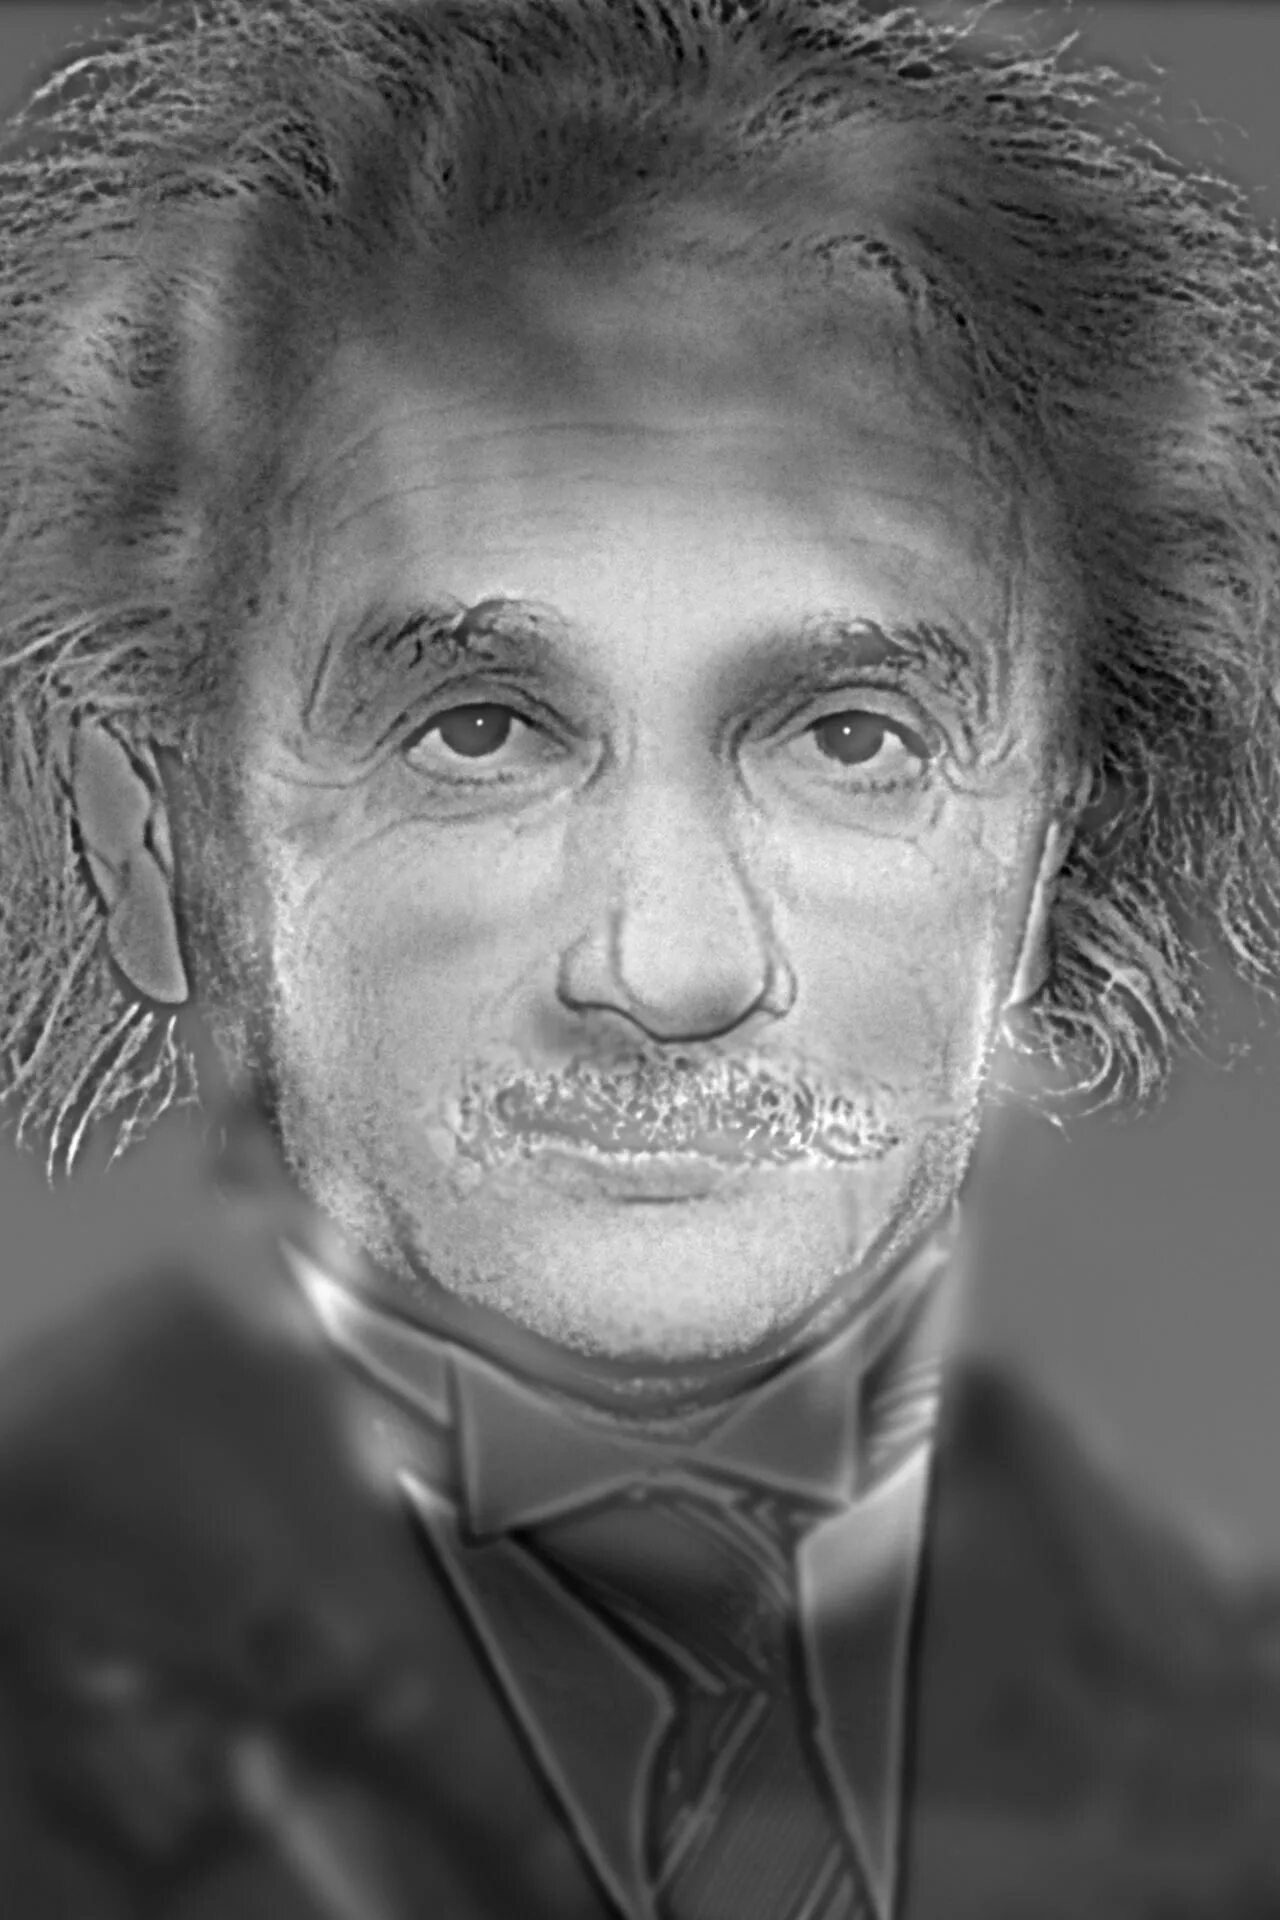 Иллюзия Эйнштейна и Монро. Оптическая иллюзия Эйнштейн Монро. Тест на близорукость. Оптические иллюзии Эйнштейн или Монро.